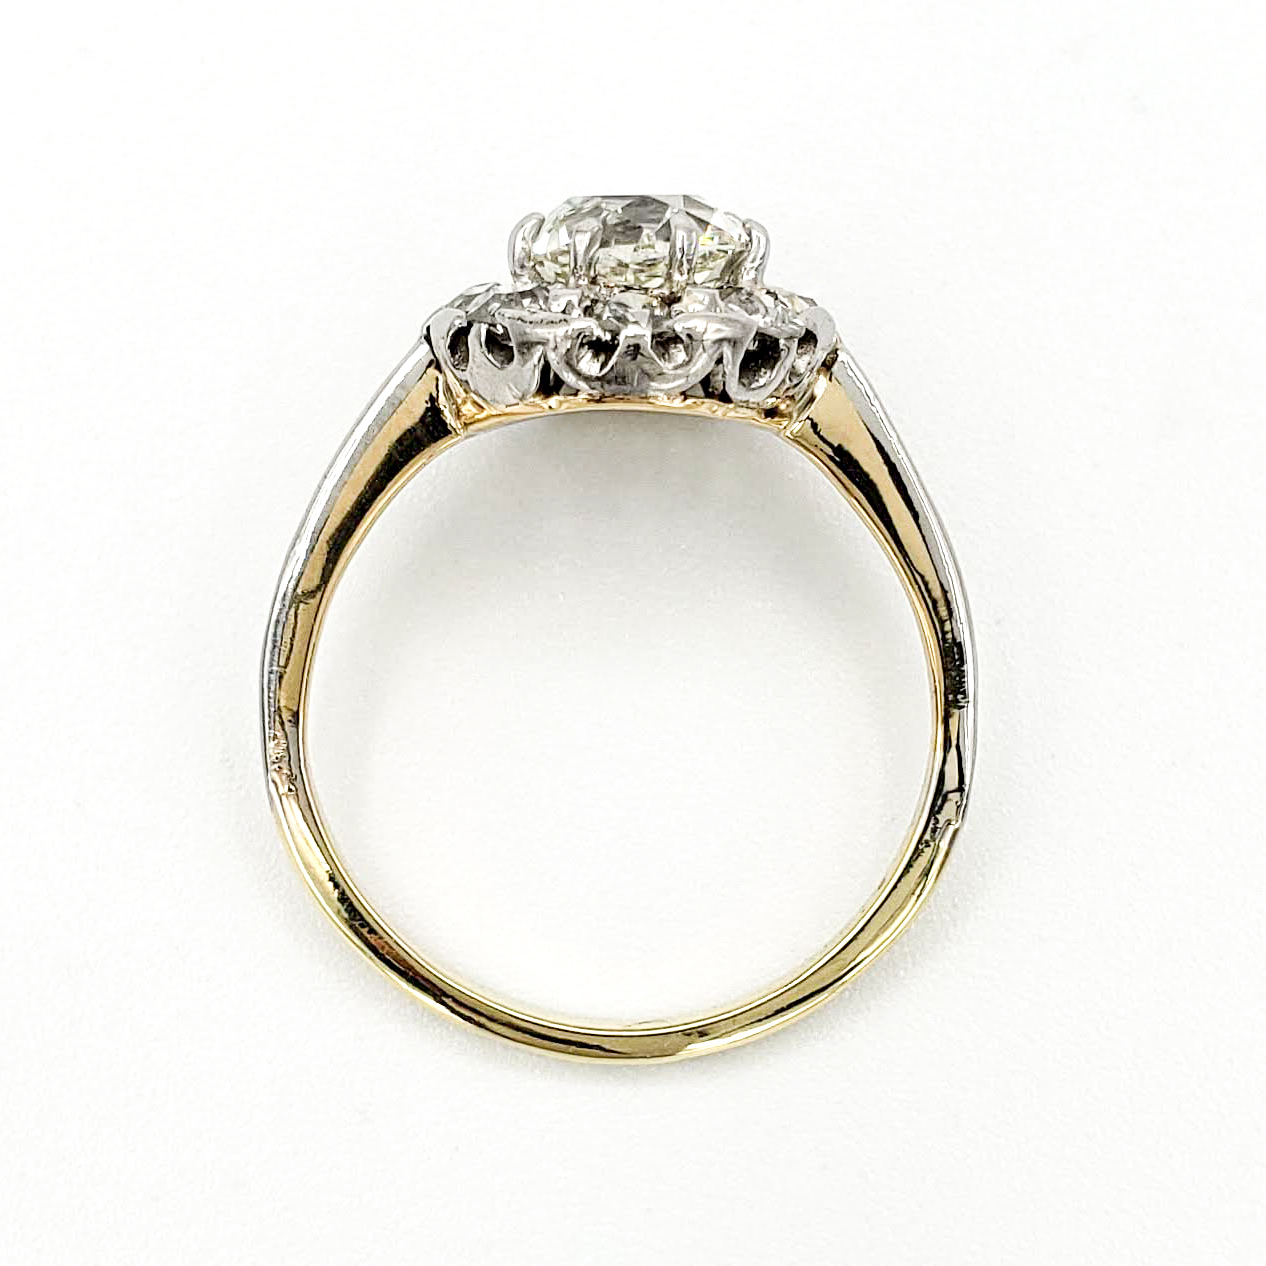 vintage-18-karat-and-platinum-gold-engagement-ring-with-1-10-carat-old-mine-cut-diamond-egl-j-vs1